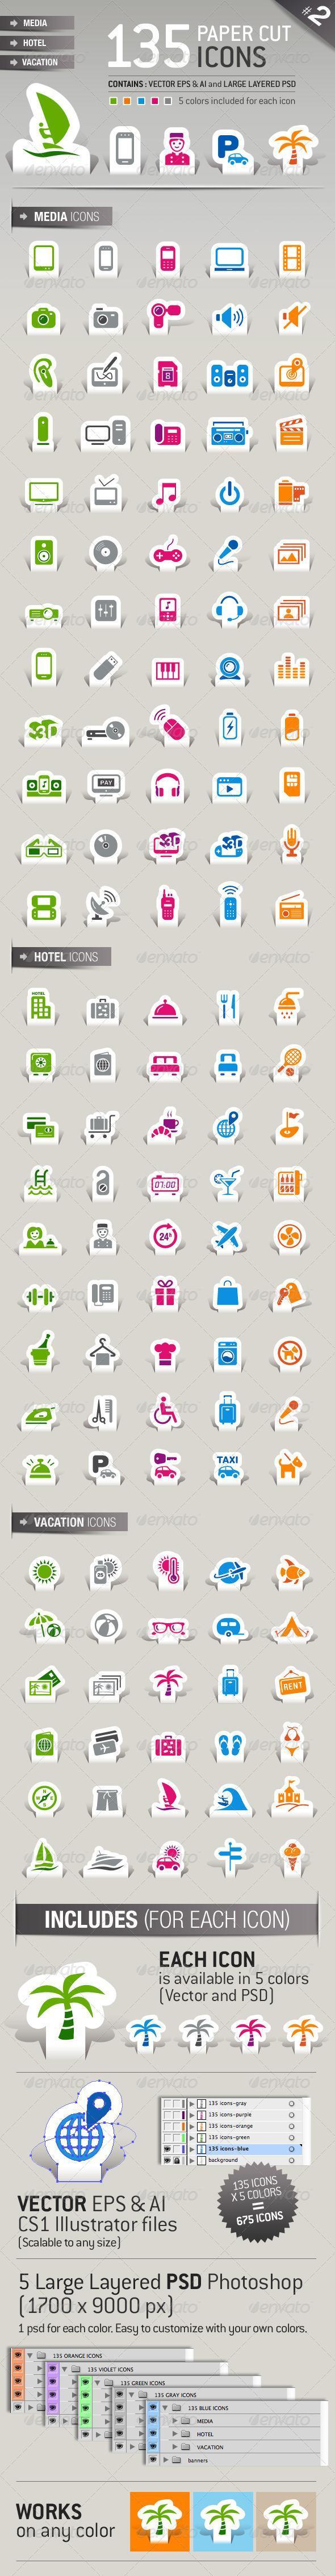 Sticker Travel Icons Vector Premium